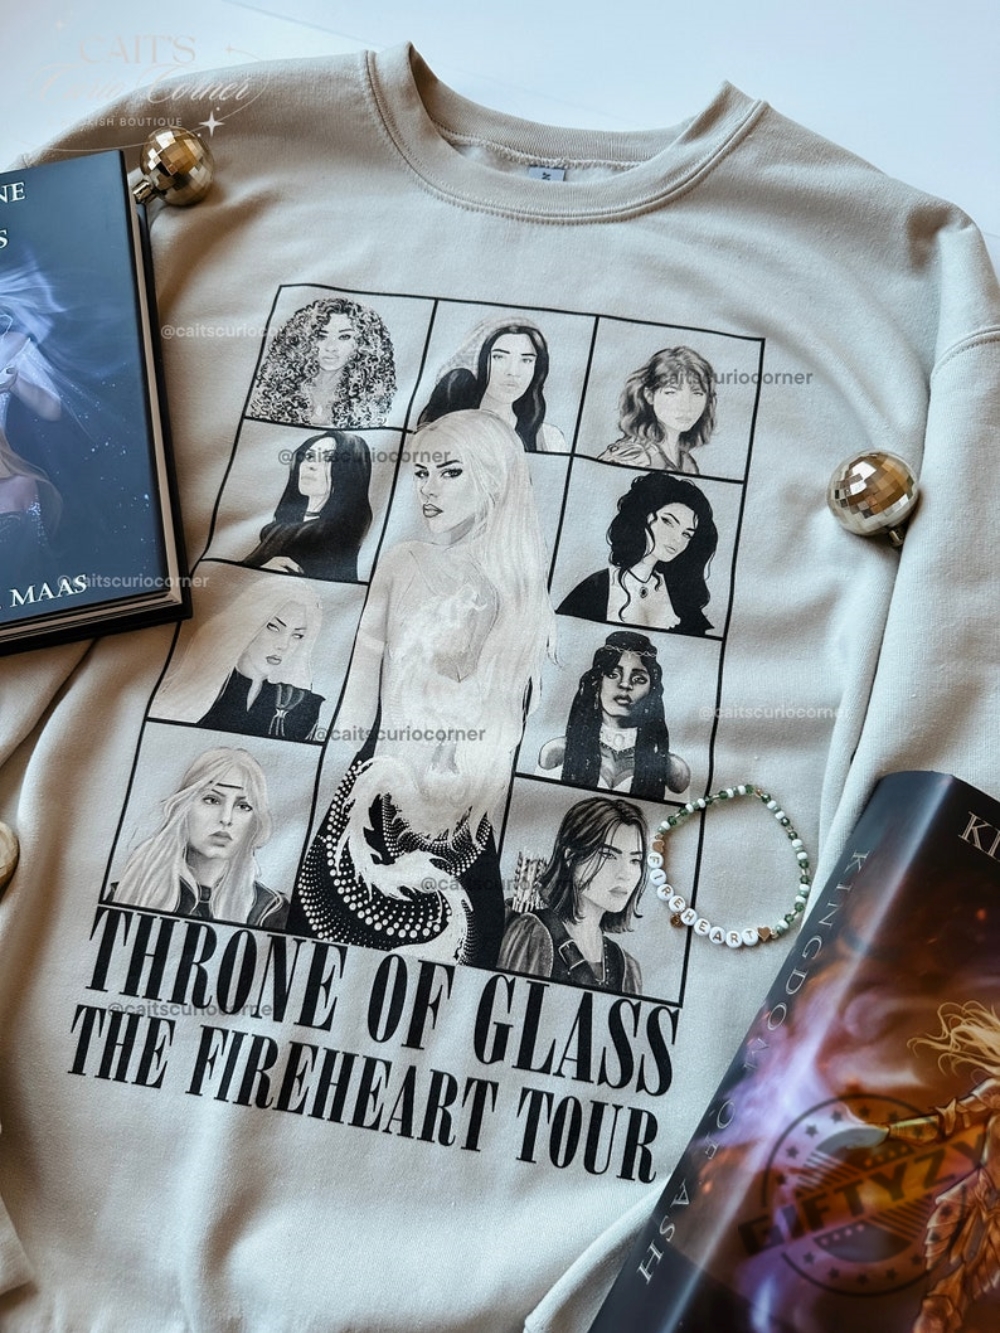 Throne Of Glass The Fireheart Tour Concert Shirt